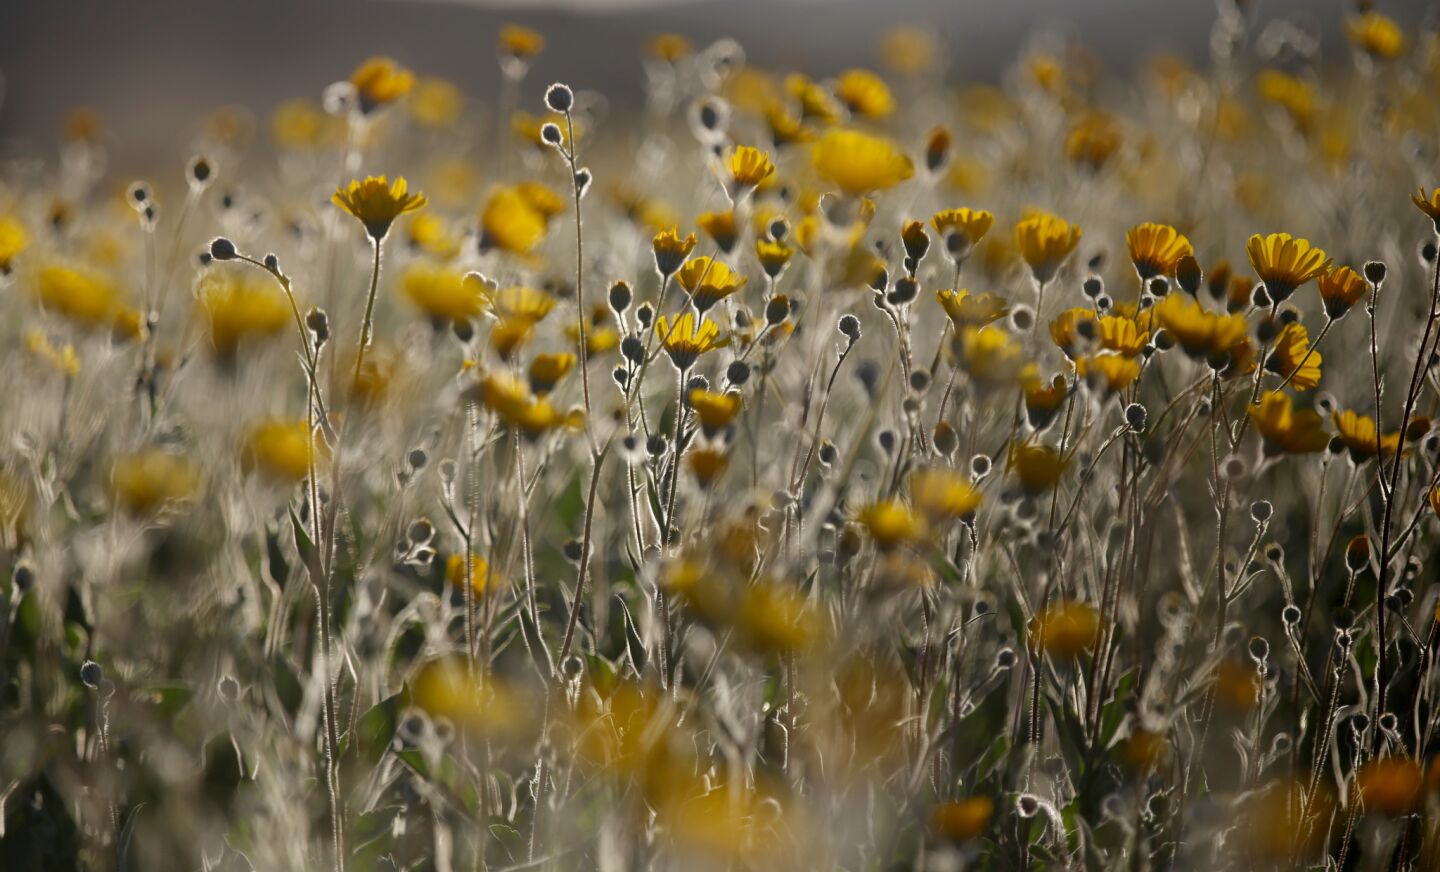 Desert sunflowers at Anza=Borrego Desert State Park in San Diego County.